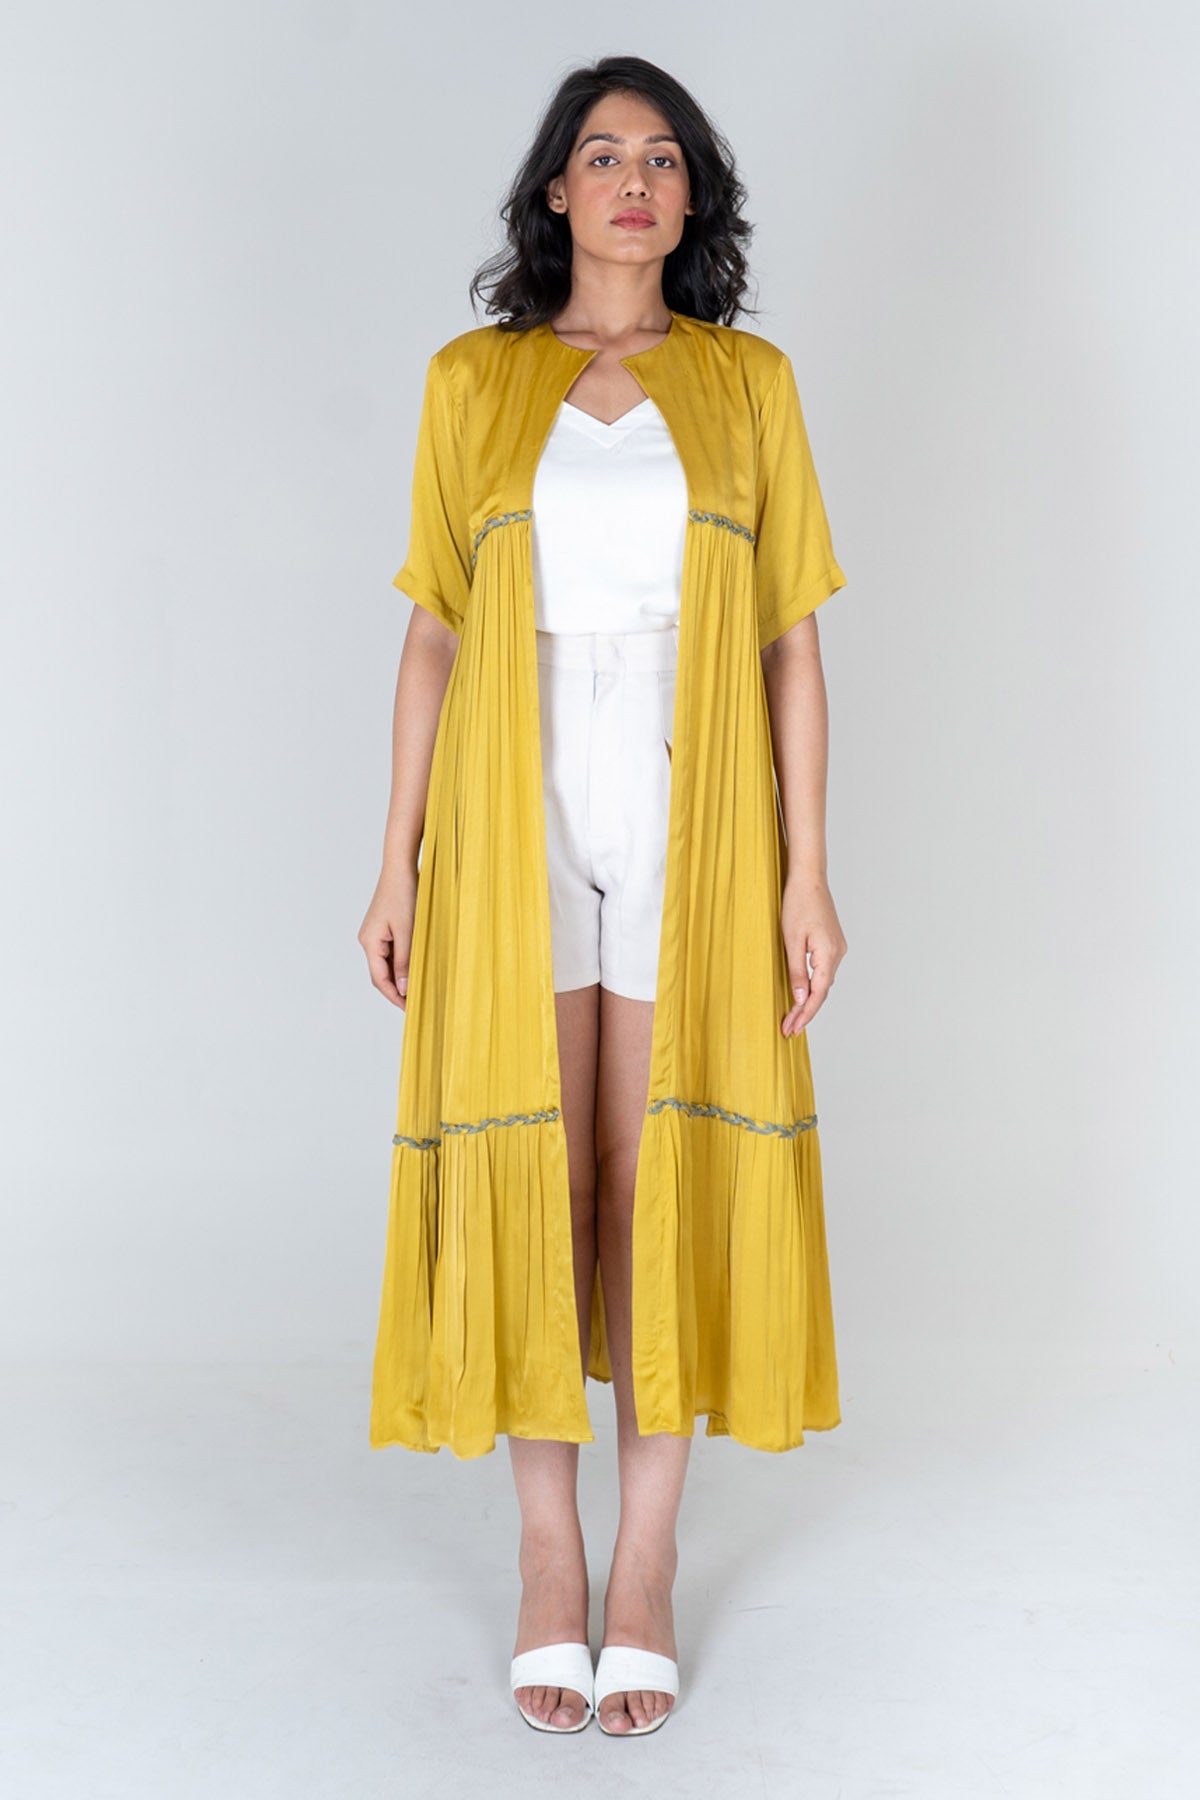 Neora by Nehal Chopra Yellow Braid Gathered Long Cape for women online at ScrollnShops